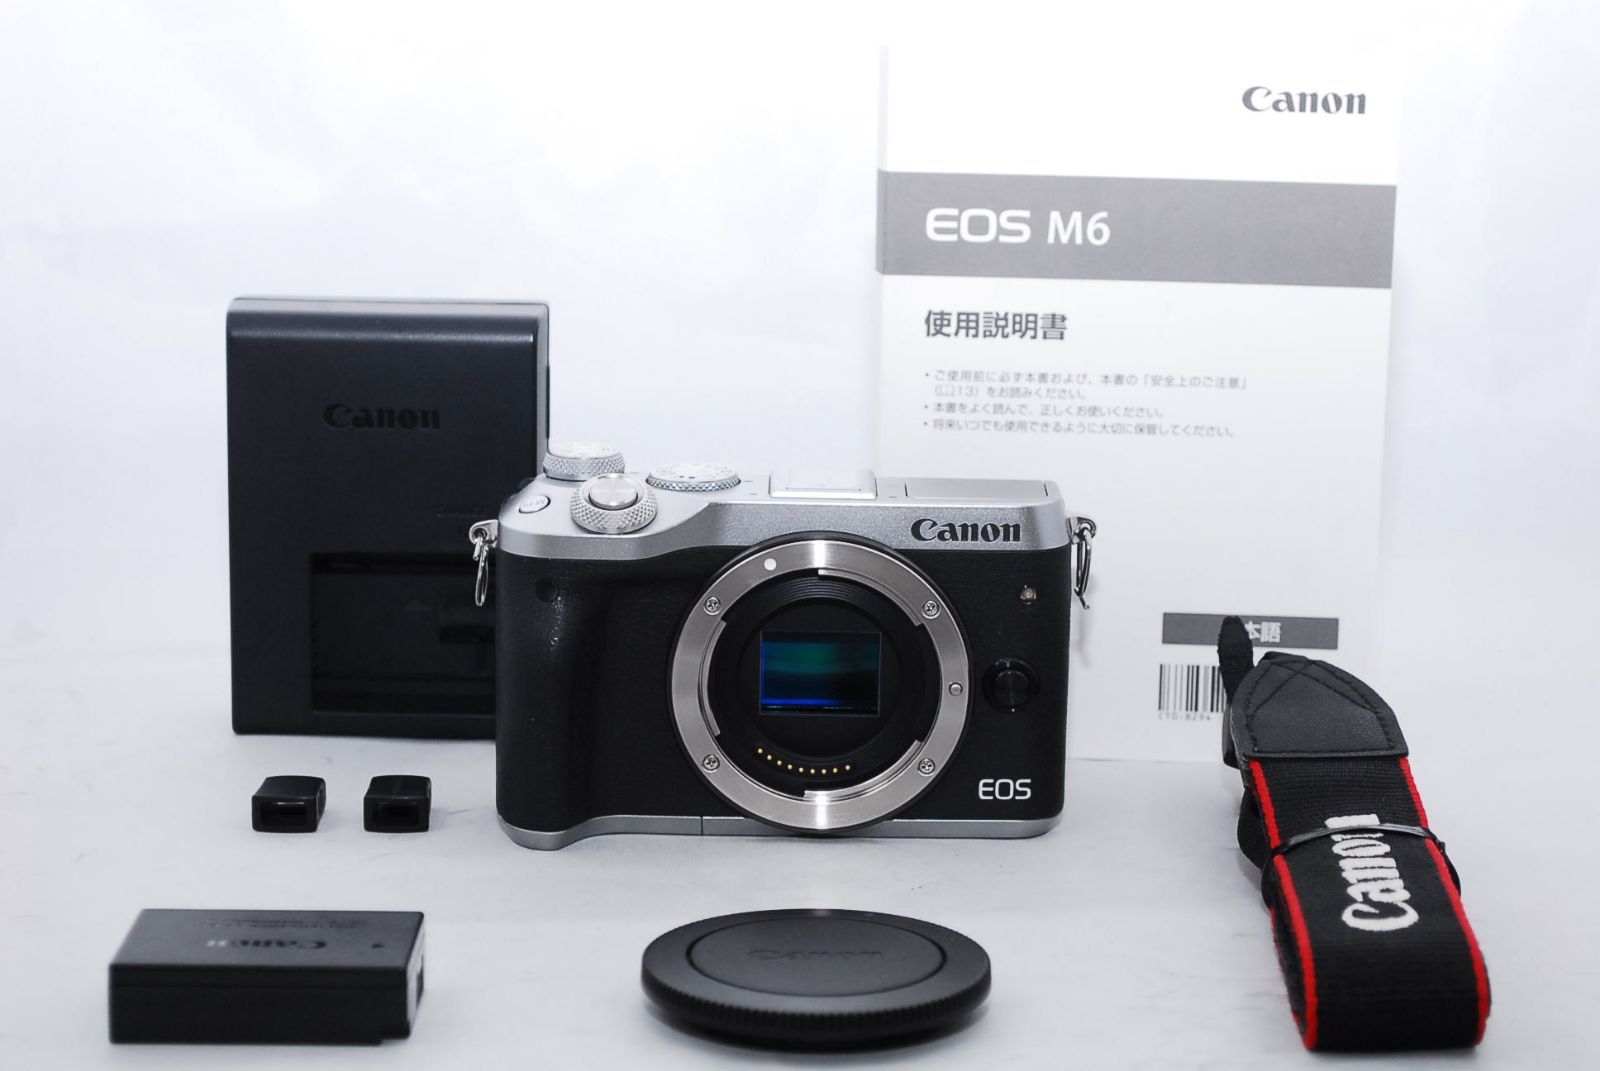 Canon ミラーレス一眼カメラ EOS M6 ボディー(シルバー) EOSM6SL-BODY